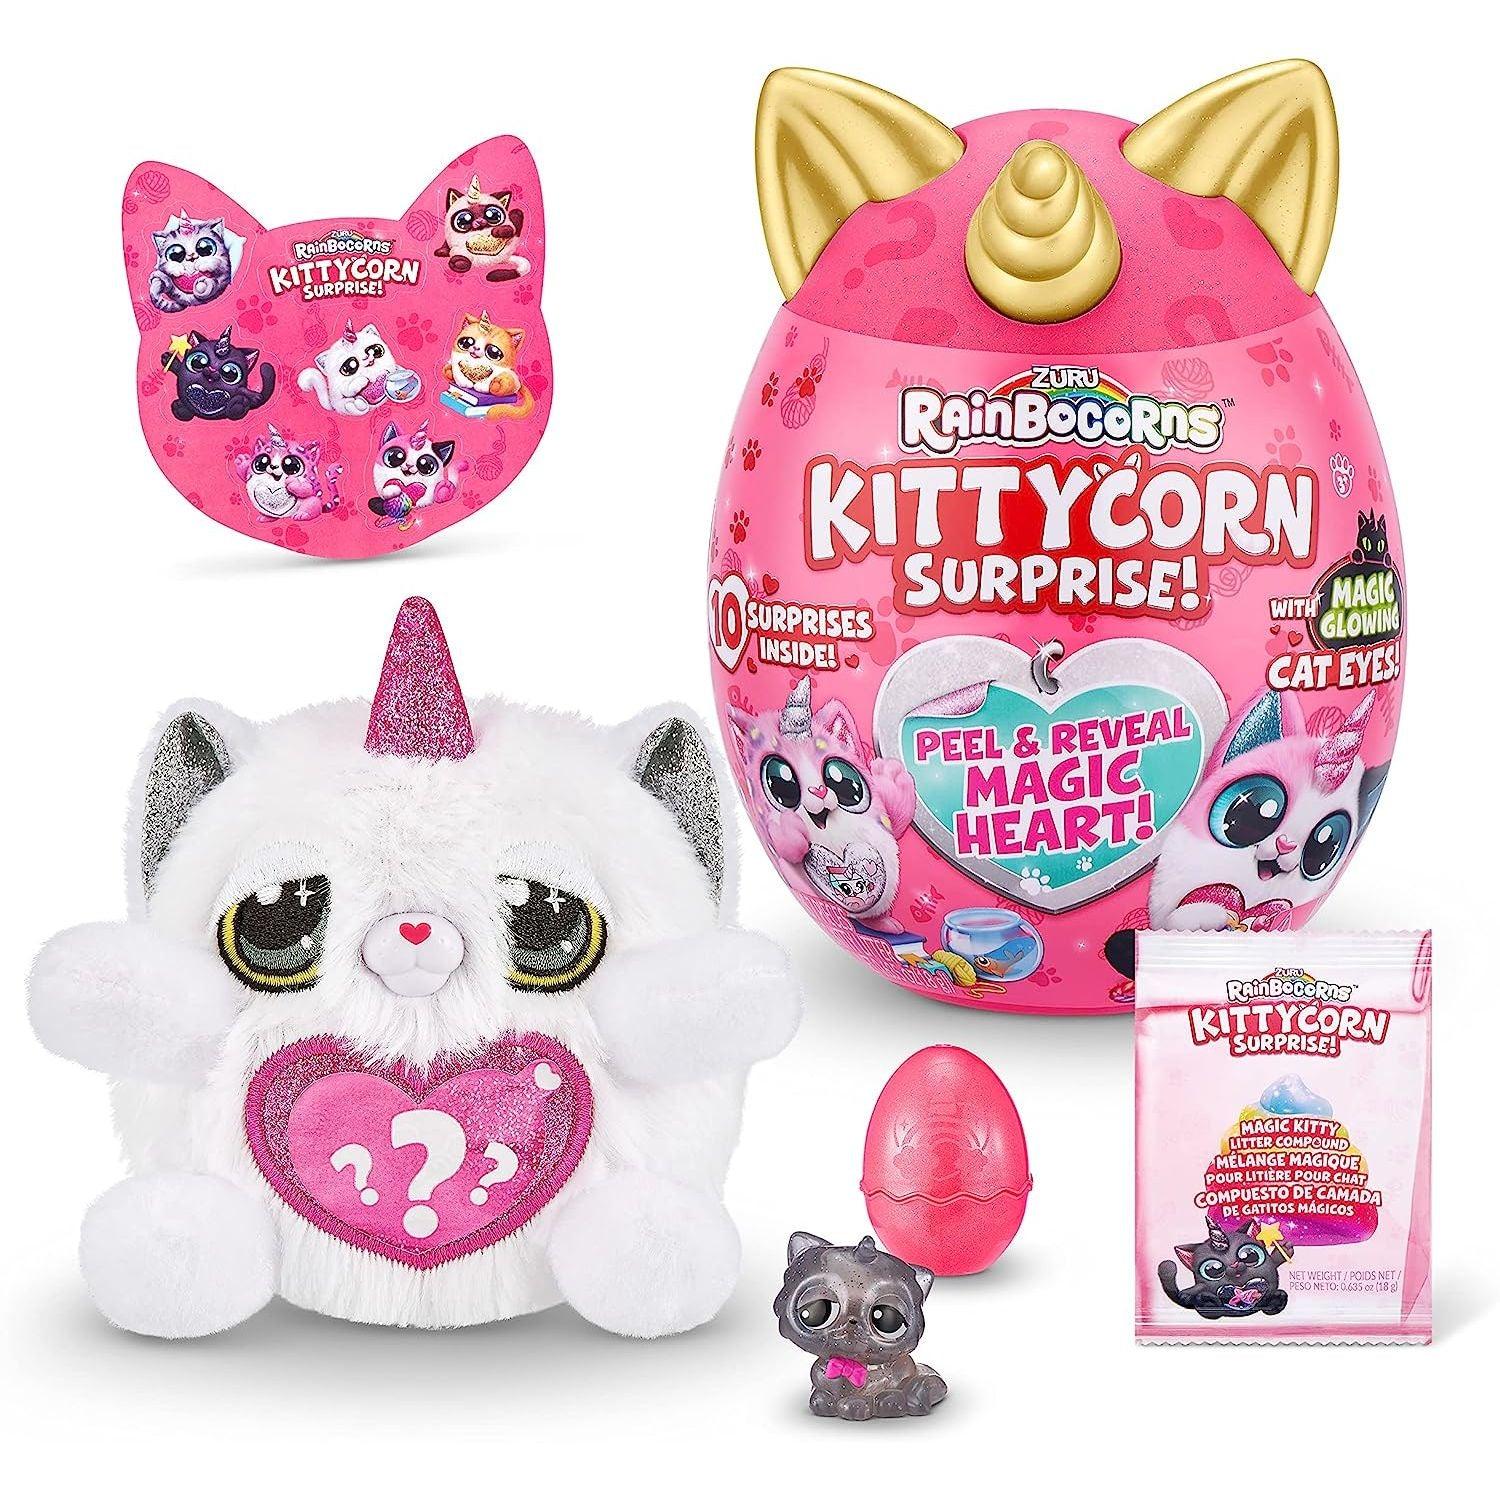 Rainbocorns Kittycorn Surprise Series 1 (Chinchilla Cat) Collectible Plush Stuffed Animal, Surprise Egg, Sticker Pack, Jelly Slime Poop 9259H - BumbleToys - 5-7 Years, Fashion Dolls & Accessories, Girls